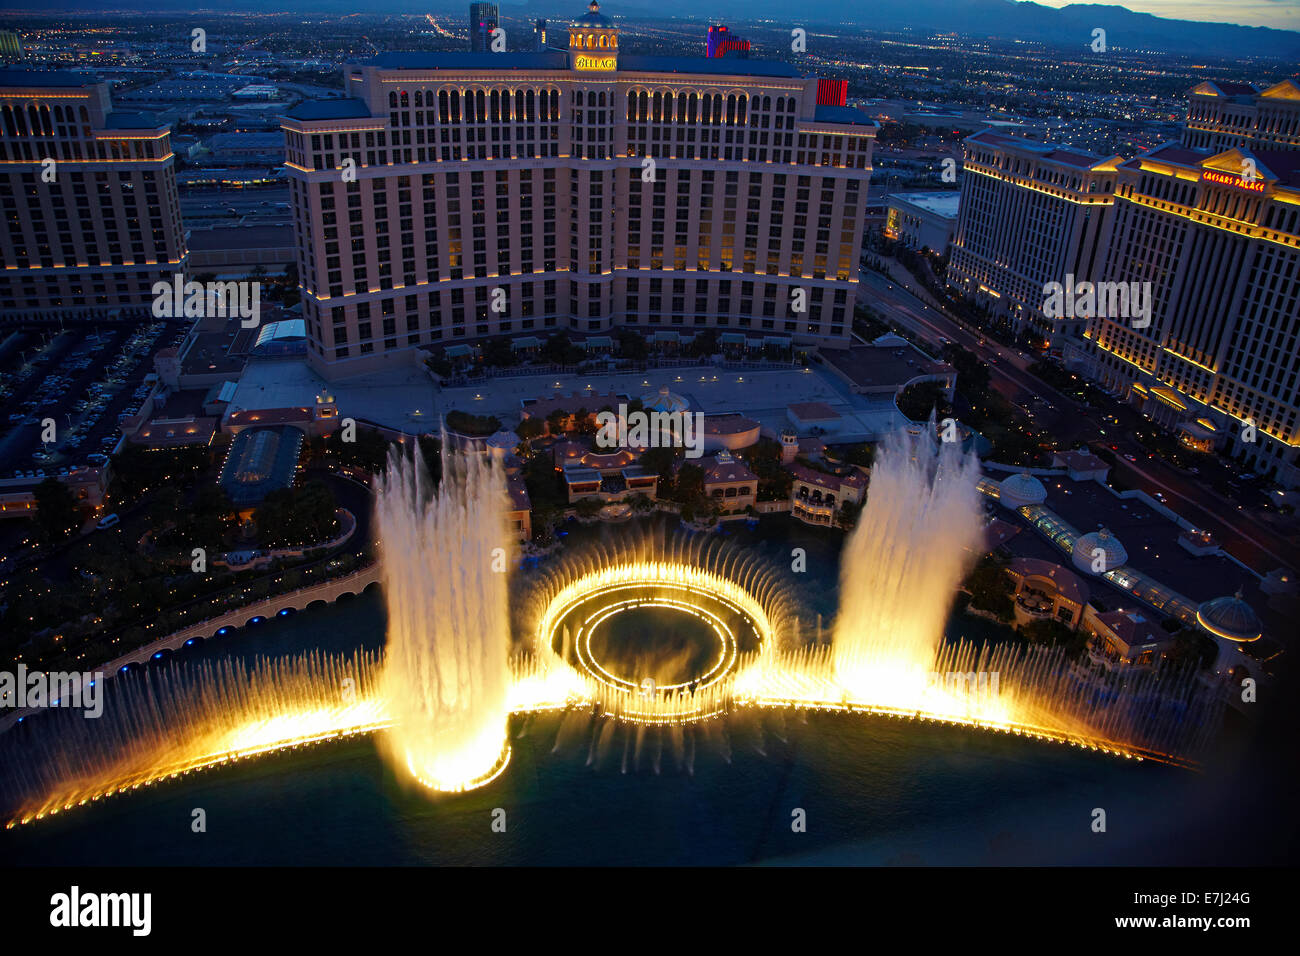 Fountains of Bellagio, Bellagio Hotel and Casino, The Strip, Las Vegas, Nevada, USA Stock Photo